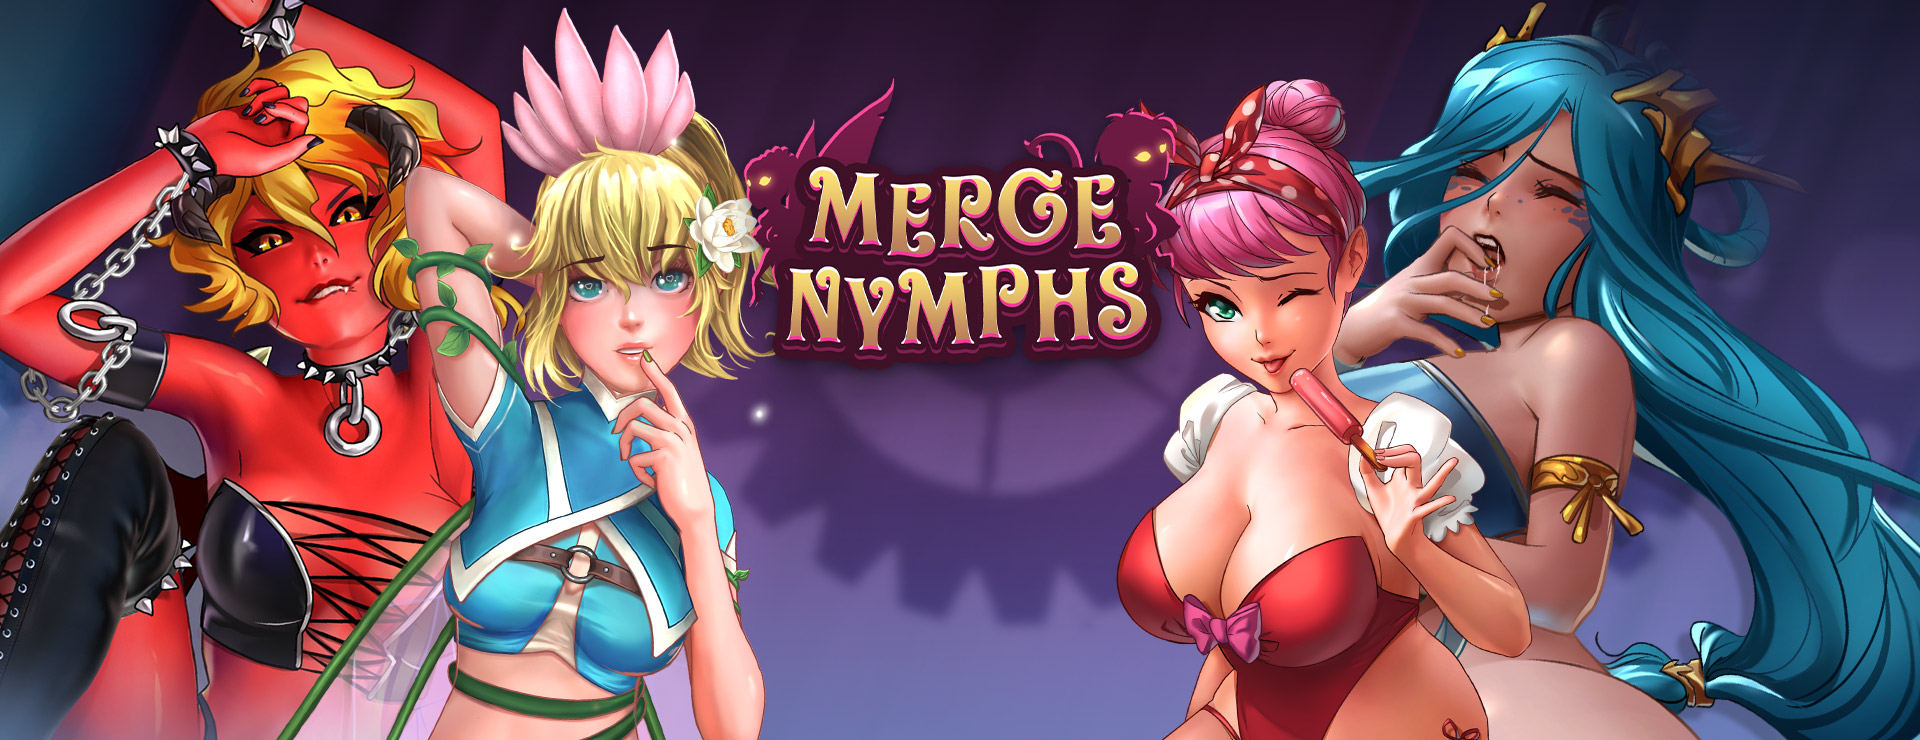 Merge Nymphs Game - Casual Juego